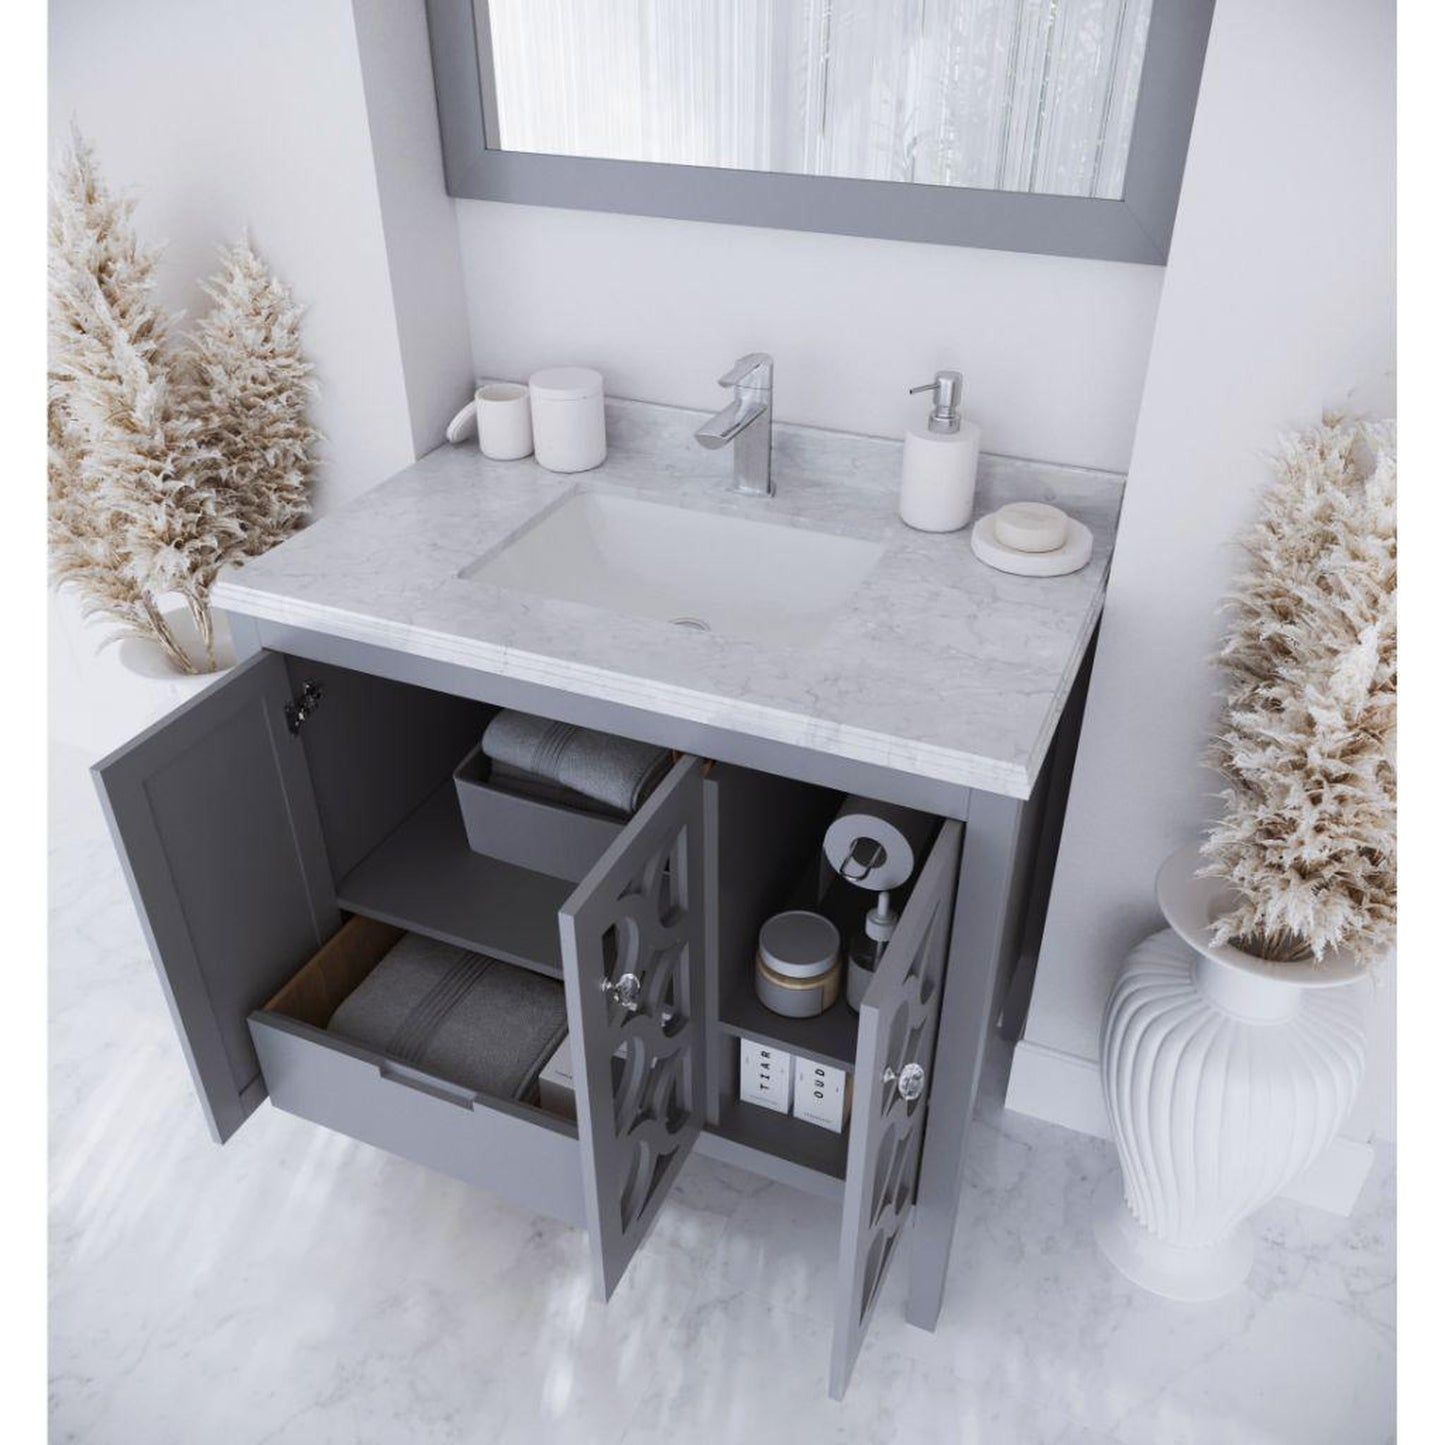 Laviva Mediterraneo 36" Gray Vanity Base and White Carrara Marble Countertop With Rectangular Ceramic Sink